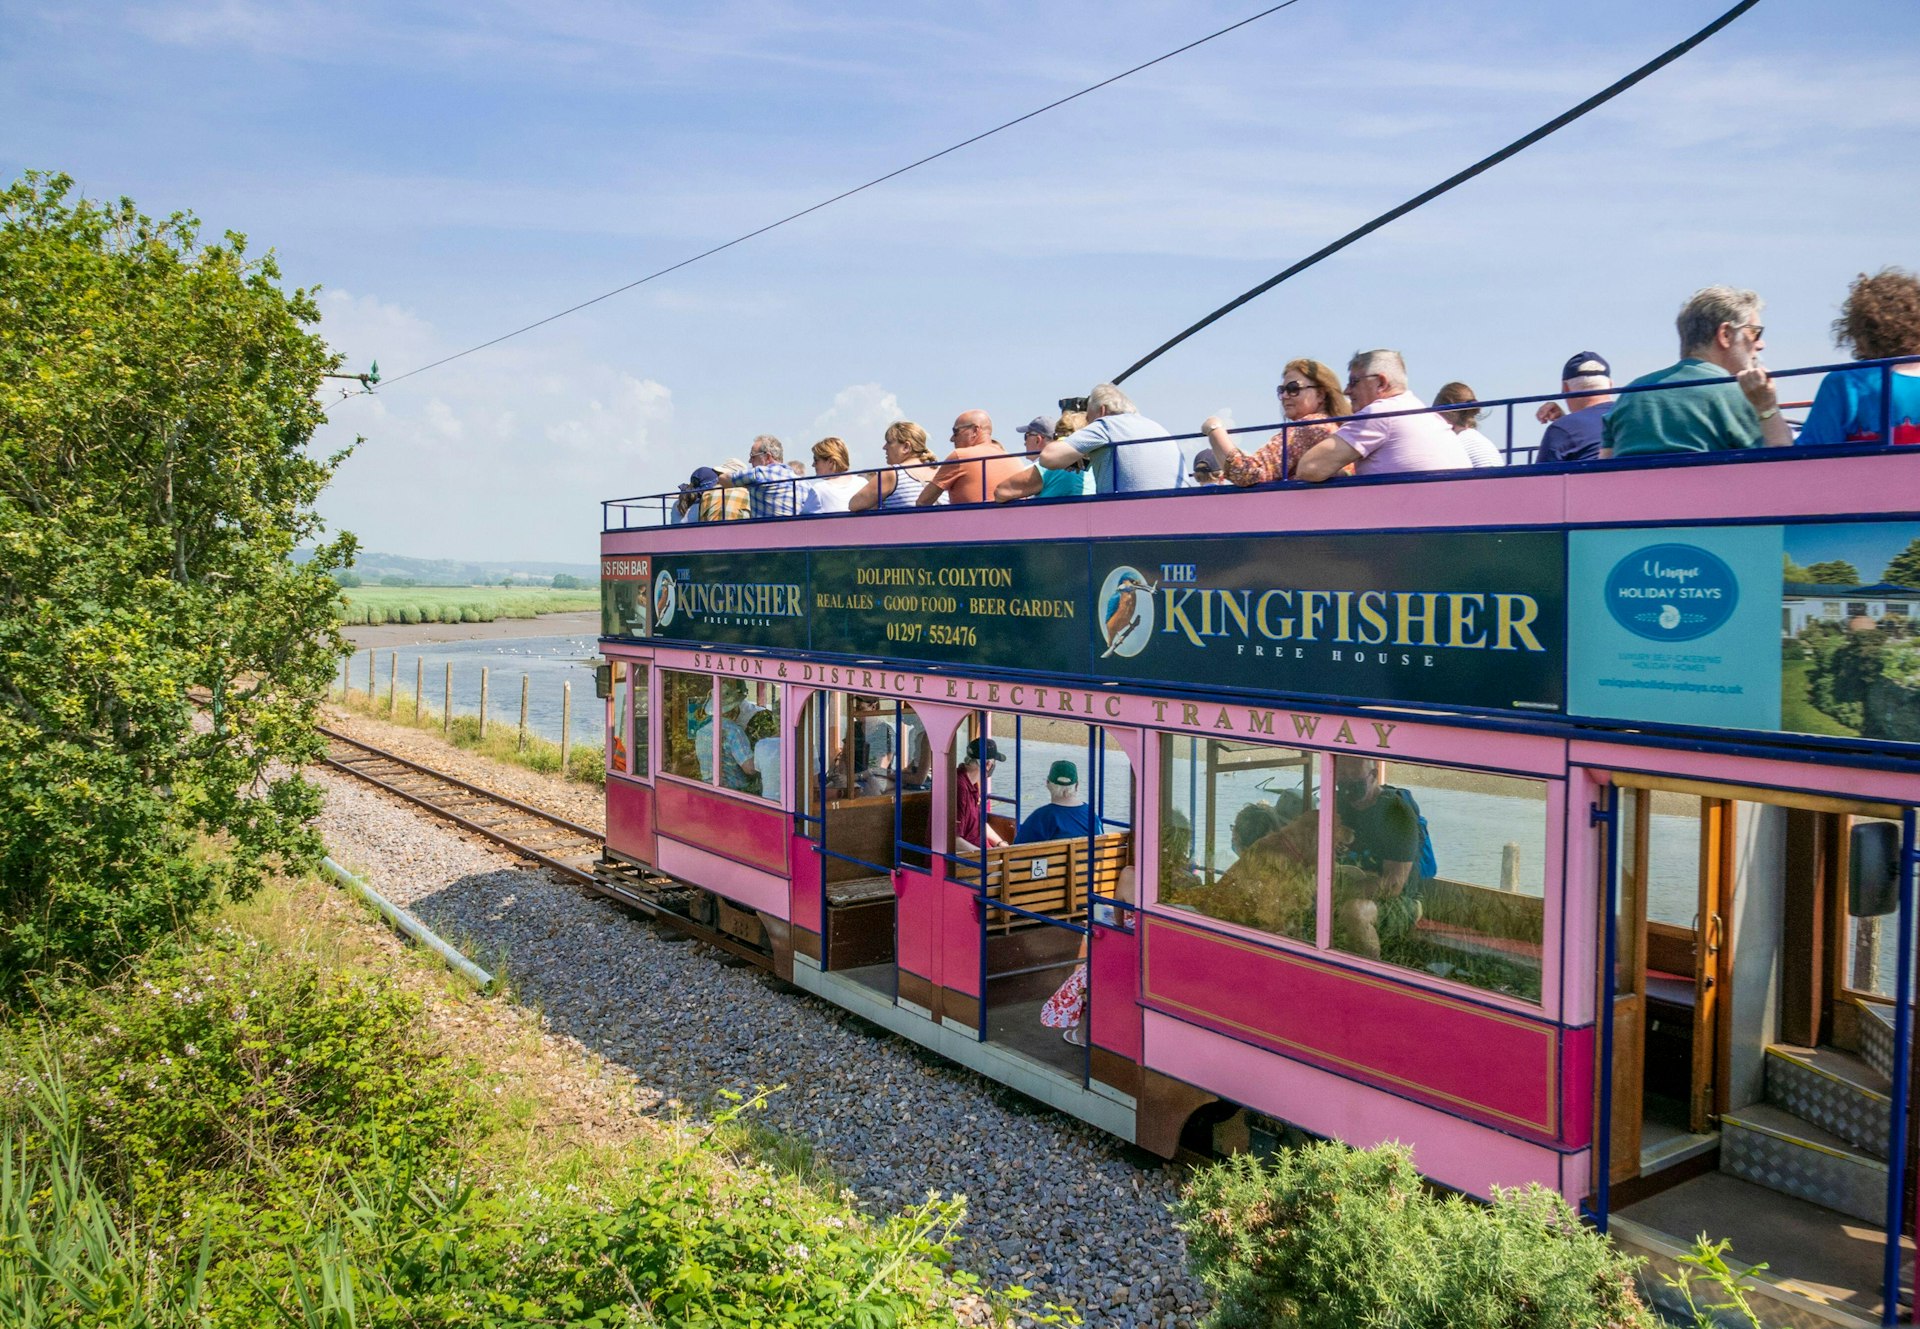 Passengers ride a historic tram on the track beside the Seaton wetlands, Seaton, Devon, England, United Kingdom